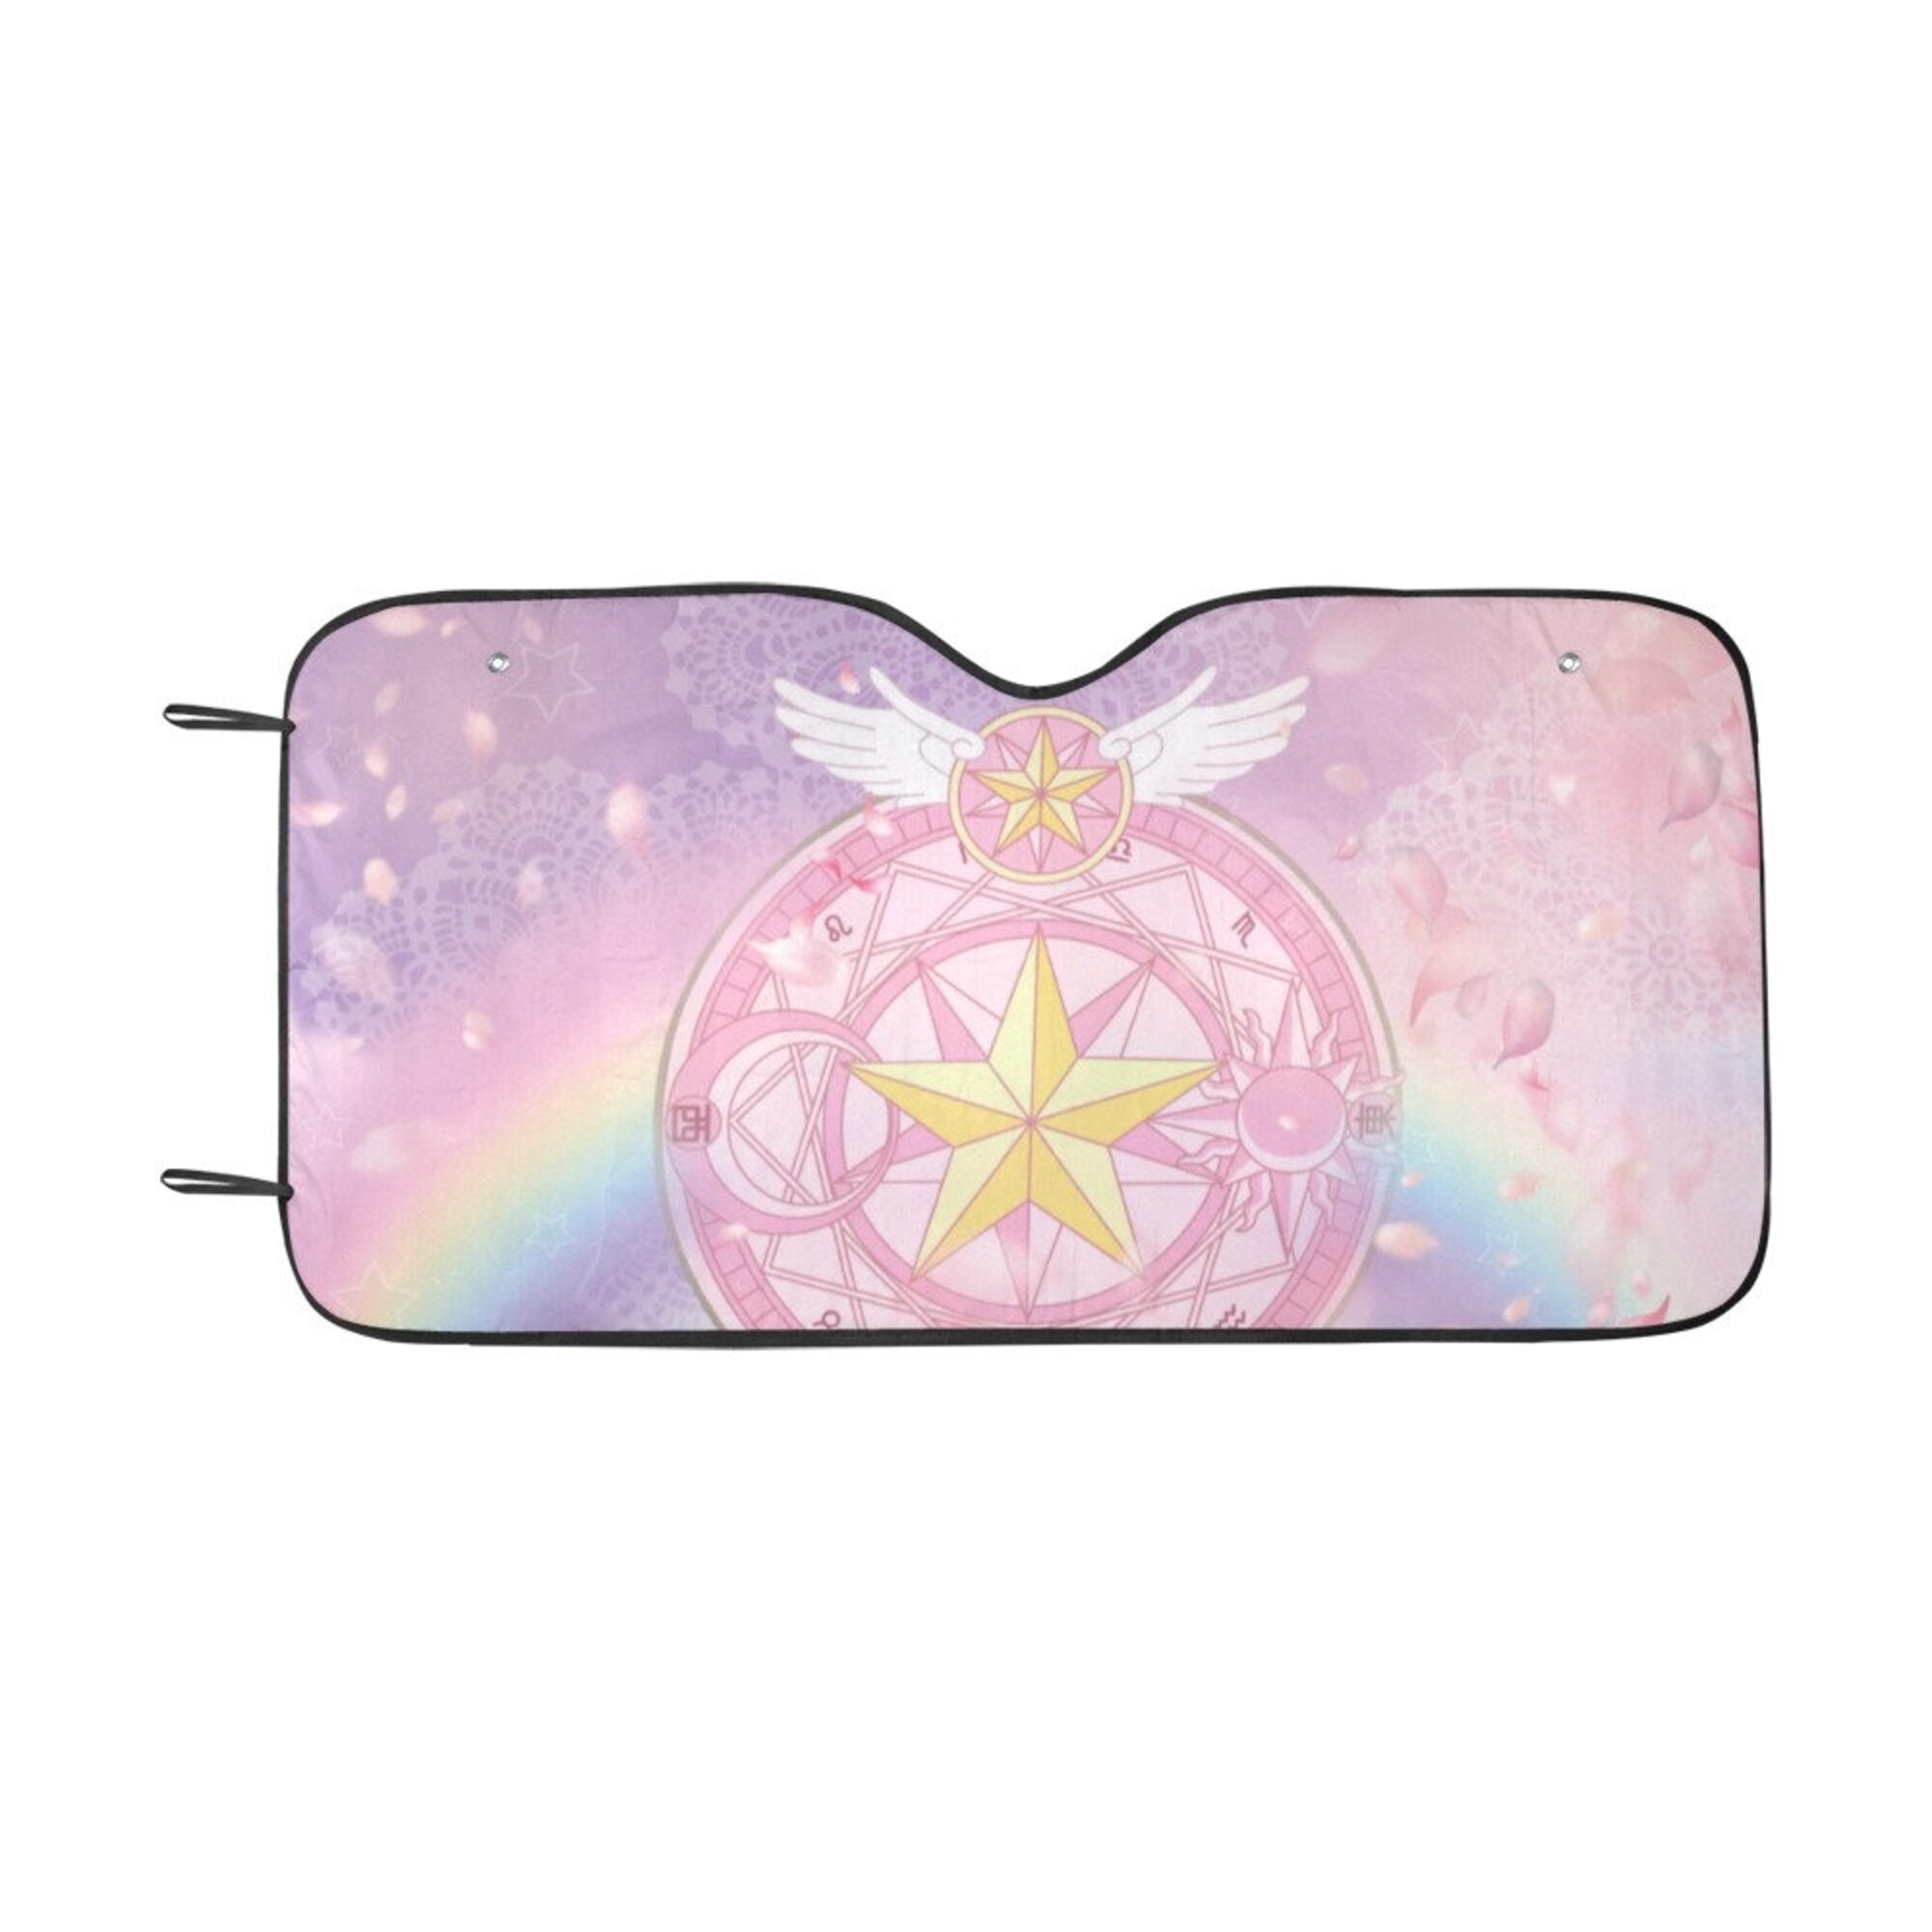 Rainbow Sakura Car sunshade for windshield